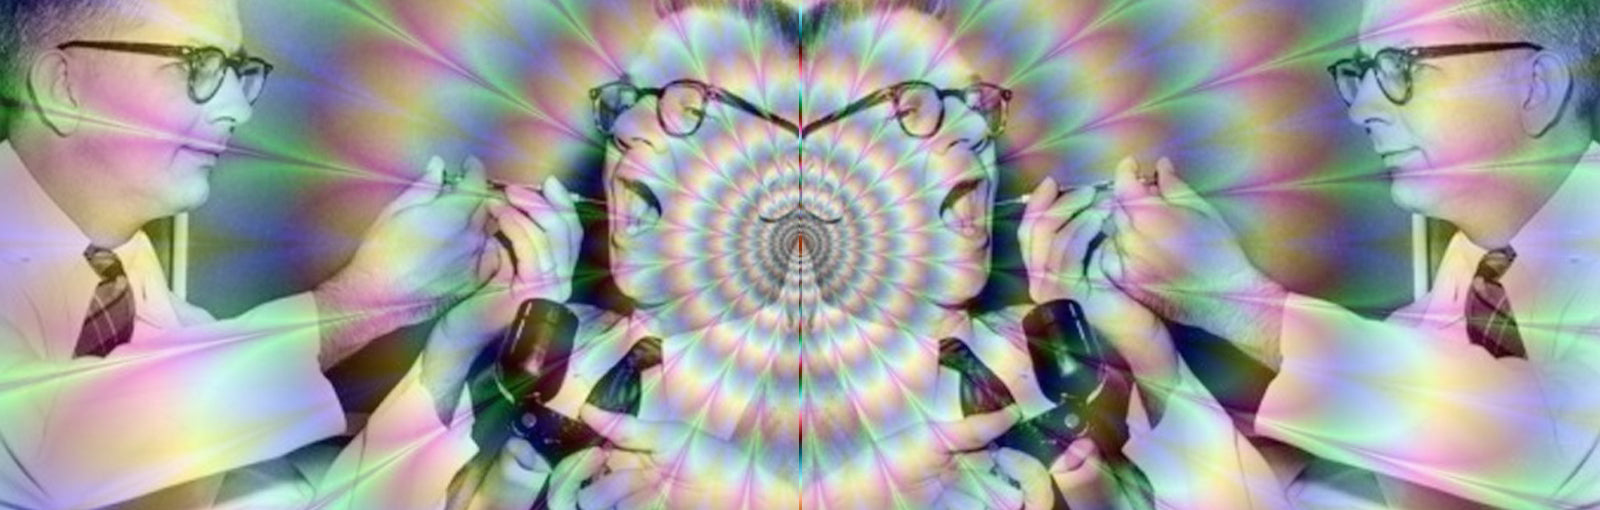 LSD MIND-CONTROL